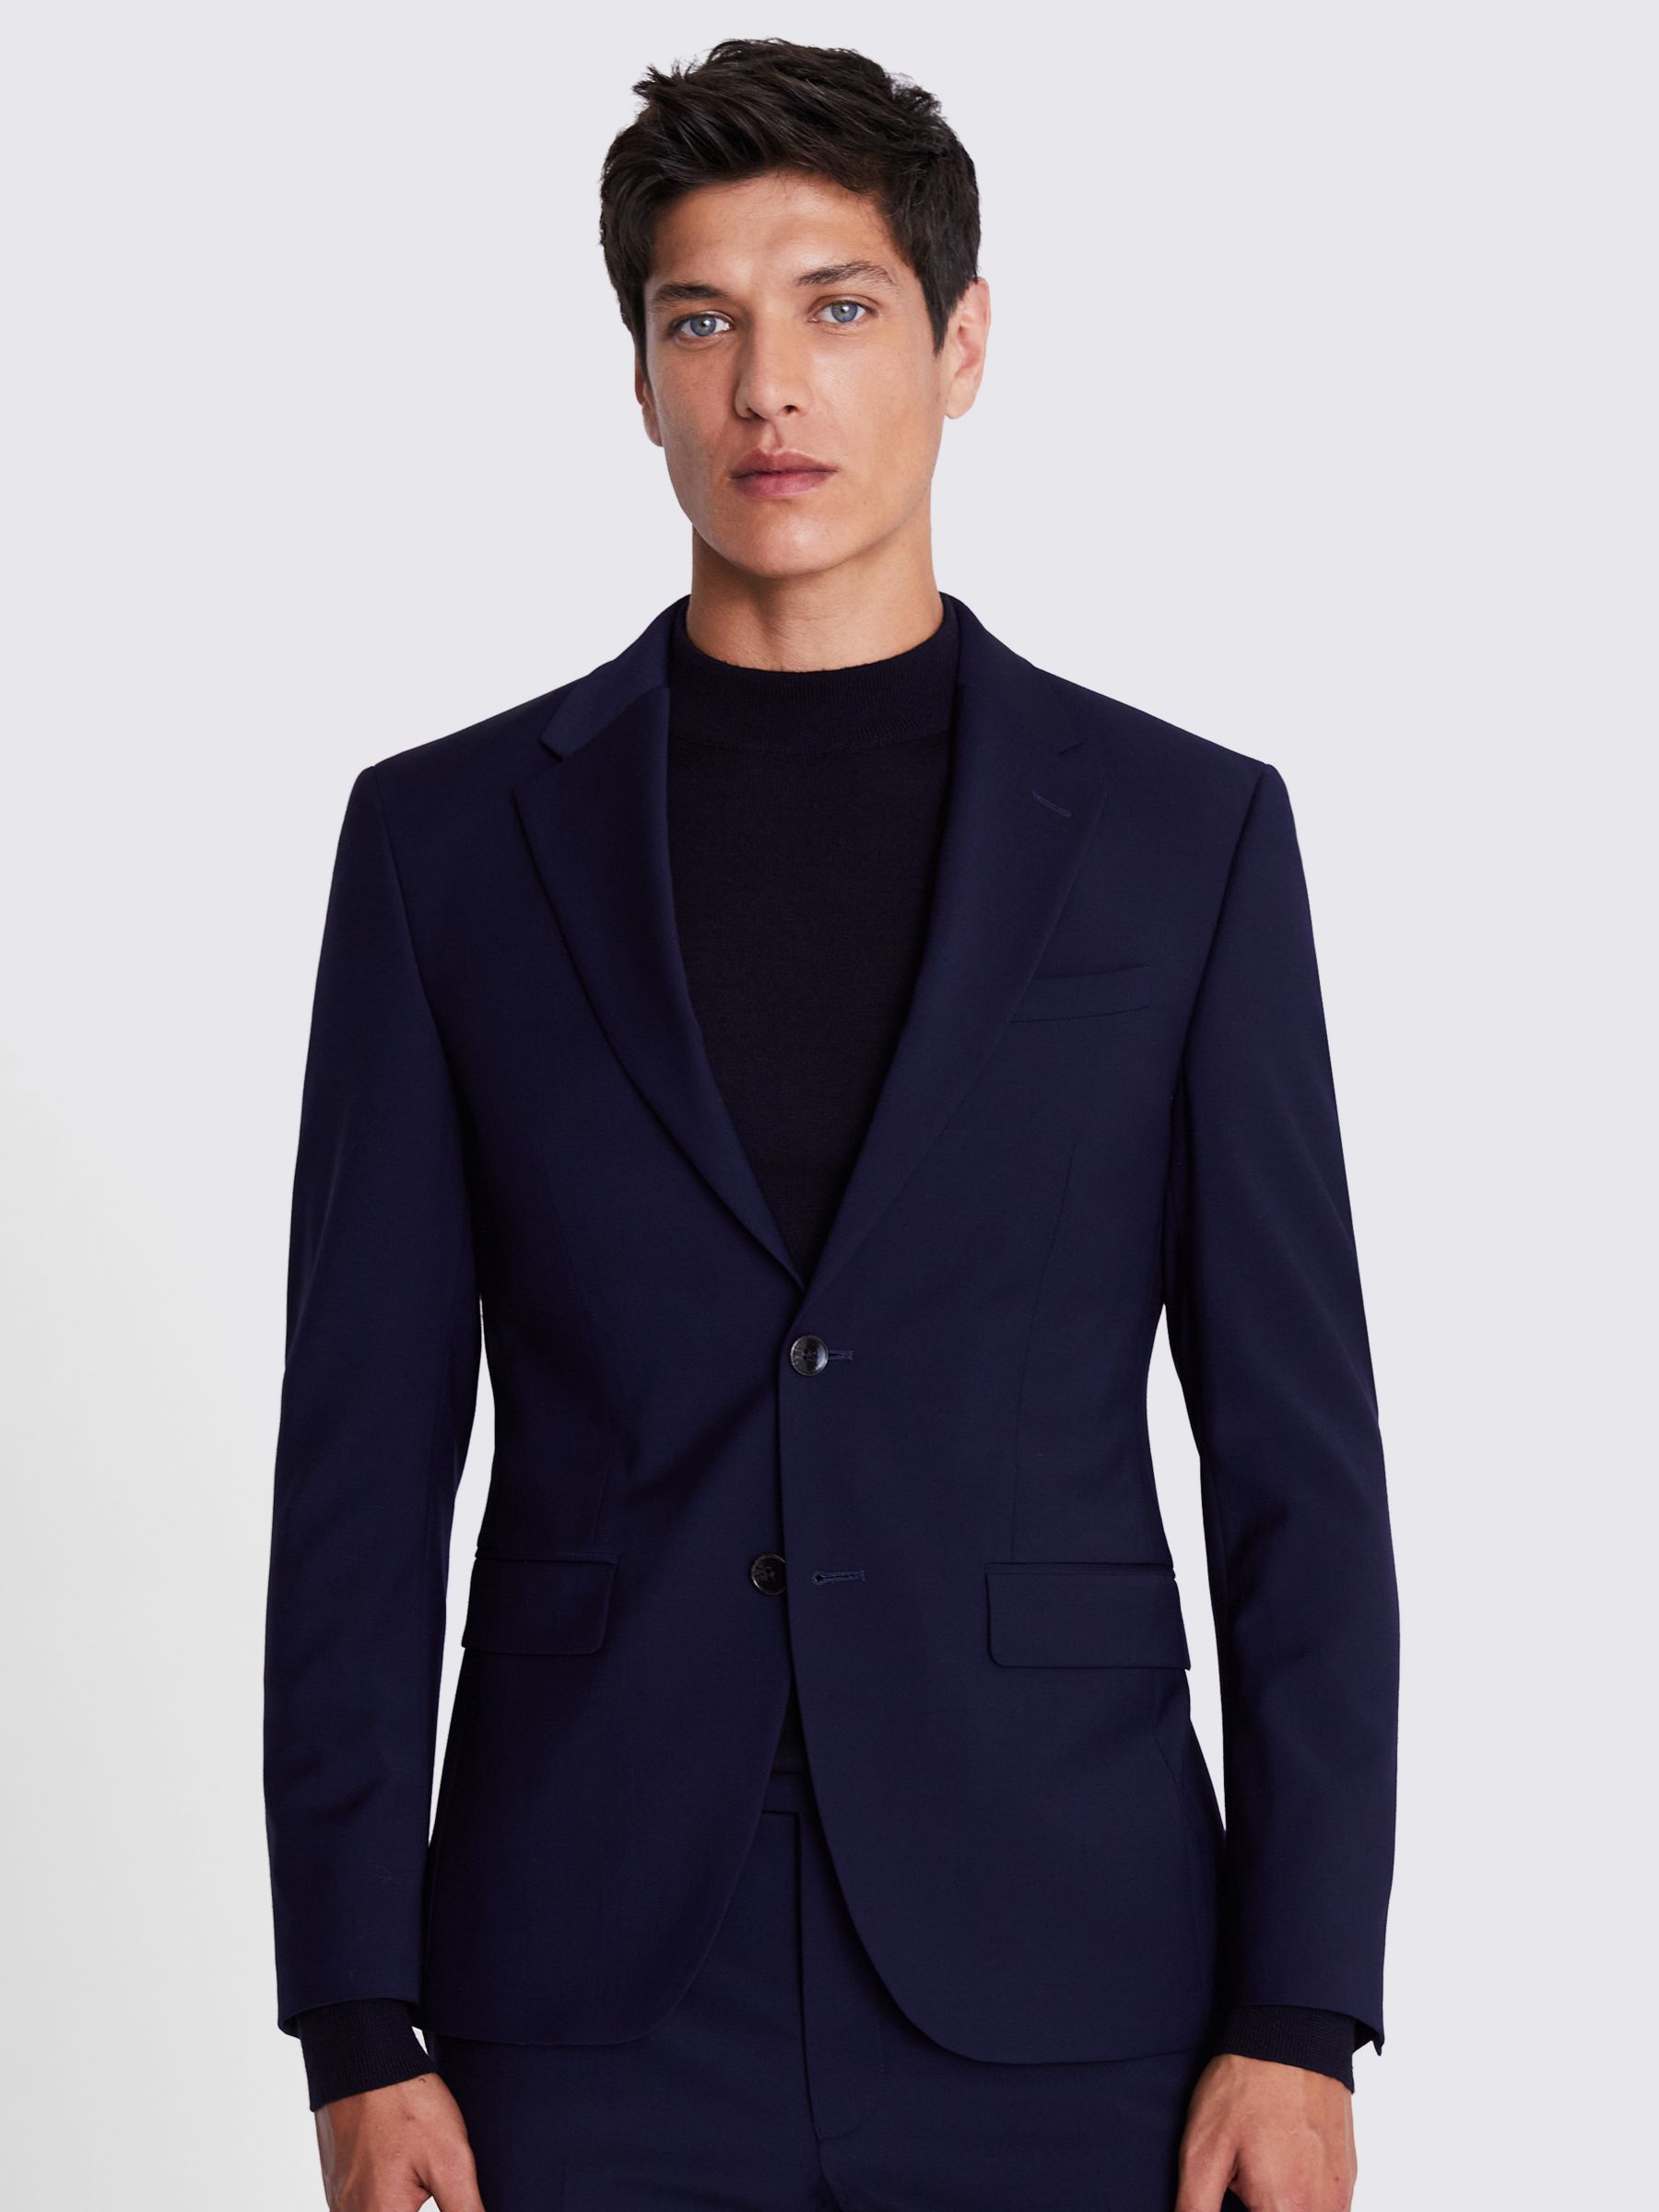 Moss x DKNY Wool Blend Slim Fit Suit Jacket, Ink